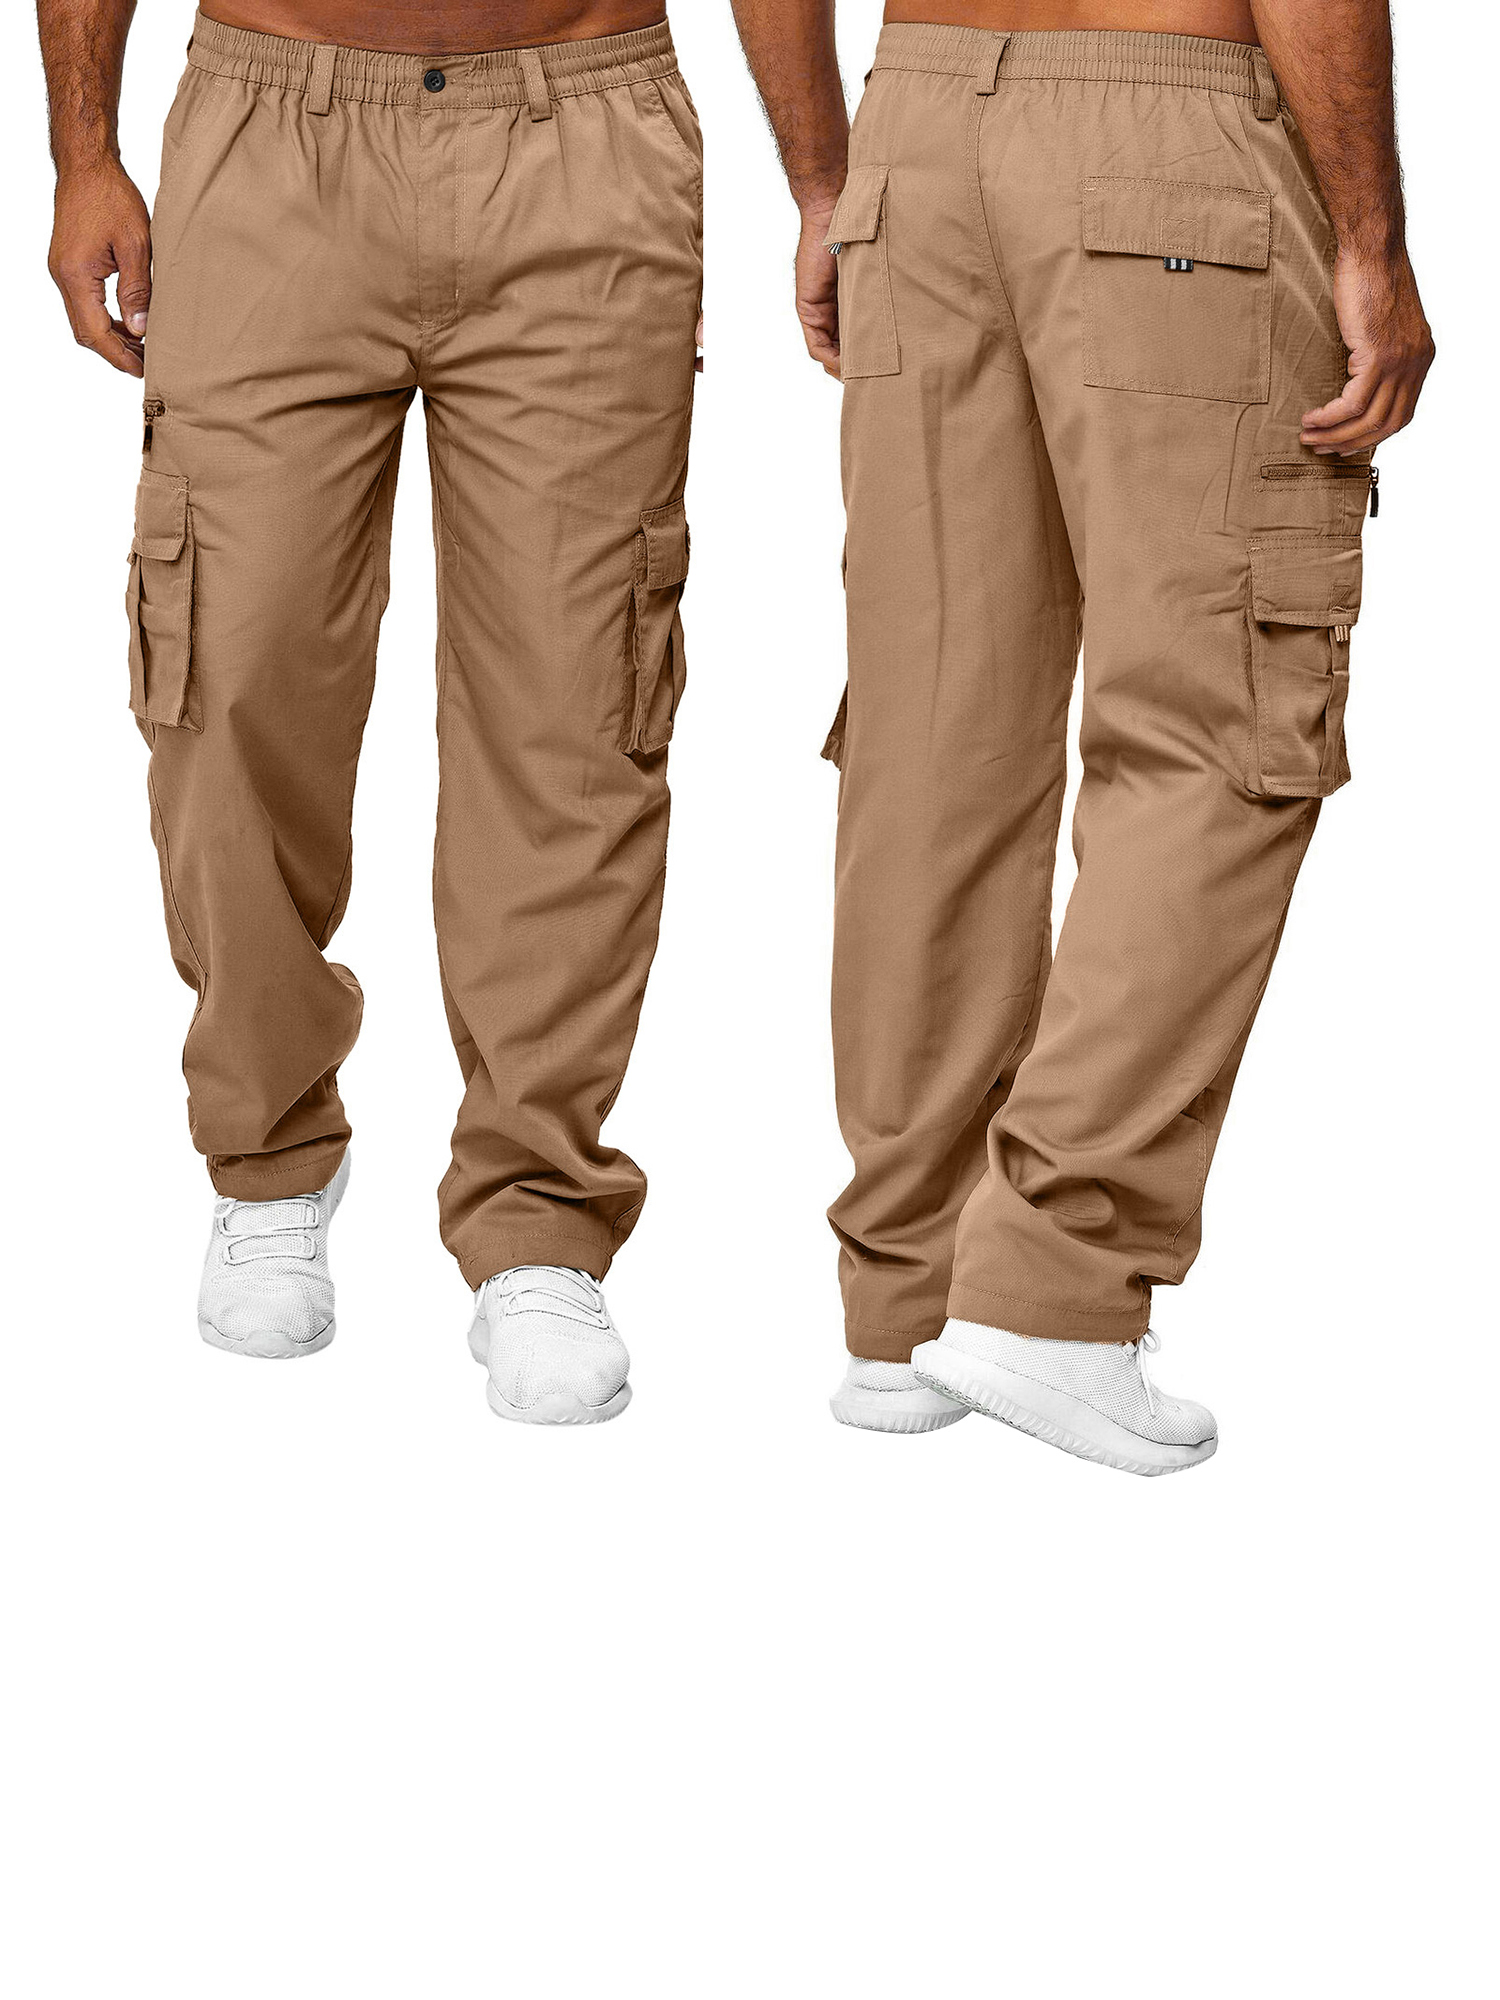 Pudcoco Men Solid Color Cargo Pants Cotton Cargo Combat Work Pants - Walmart .com